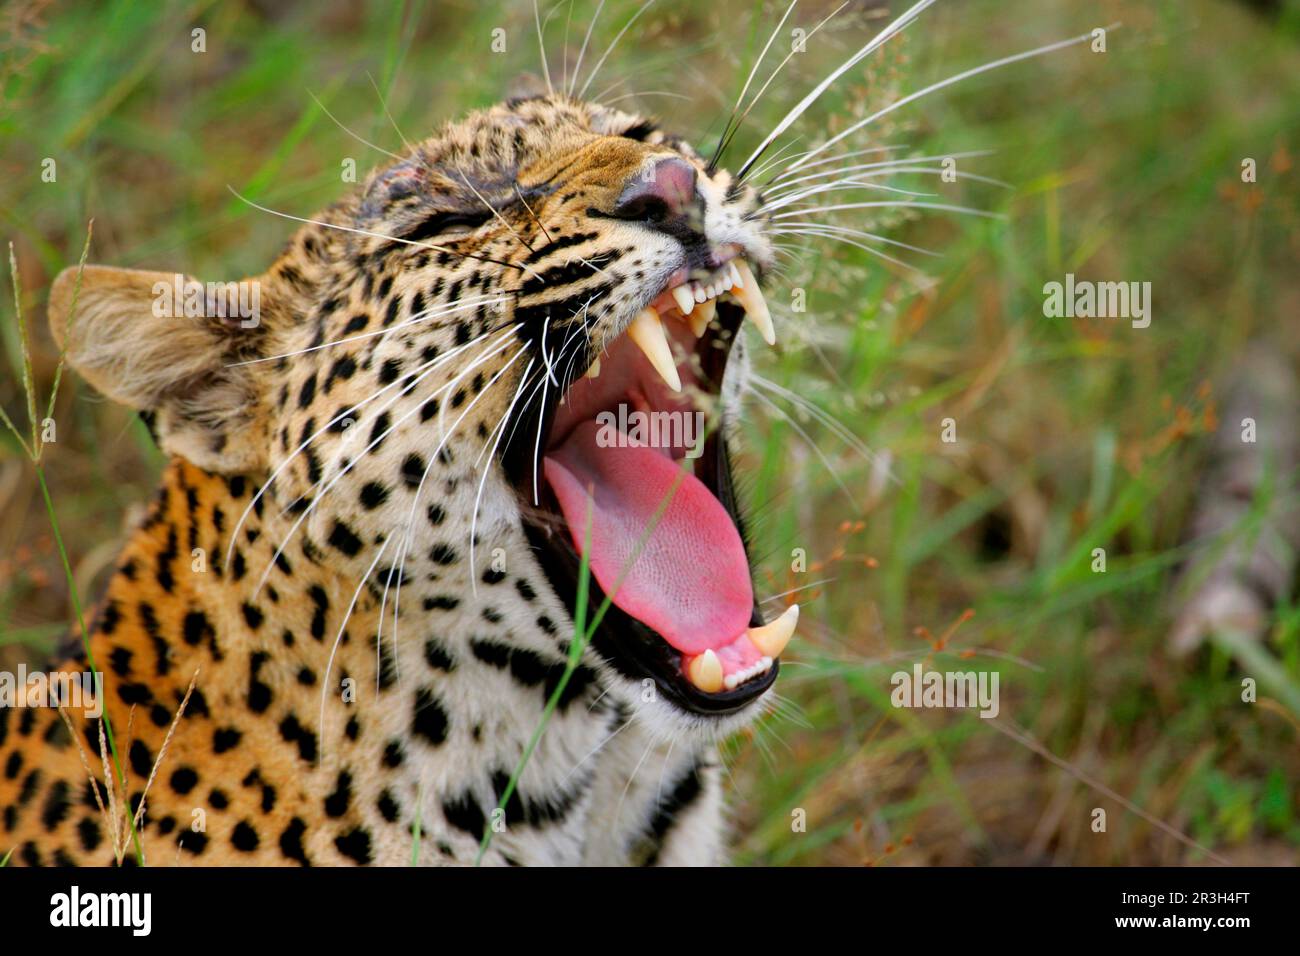 African Leopard Niche leopards (Panthera pardus), predators, mammals, animals, leopard 37 month old female yawning, injured head, gash probably Stock Photo